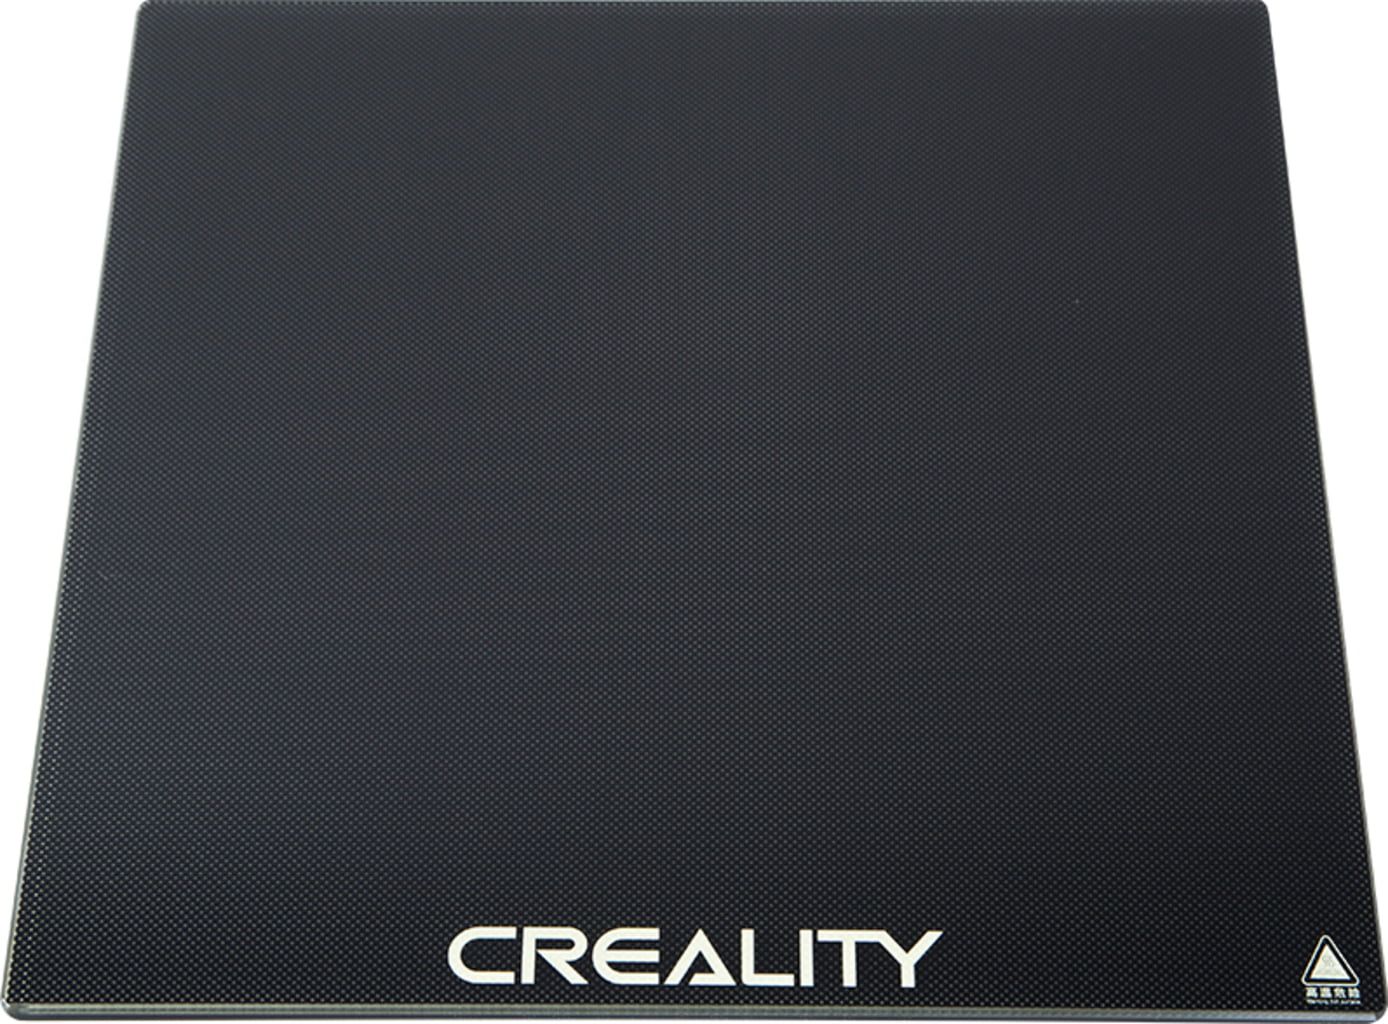 Creality Carborundum Glass Plate - Ender 3